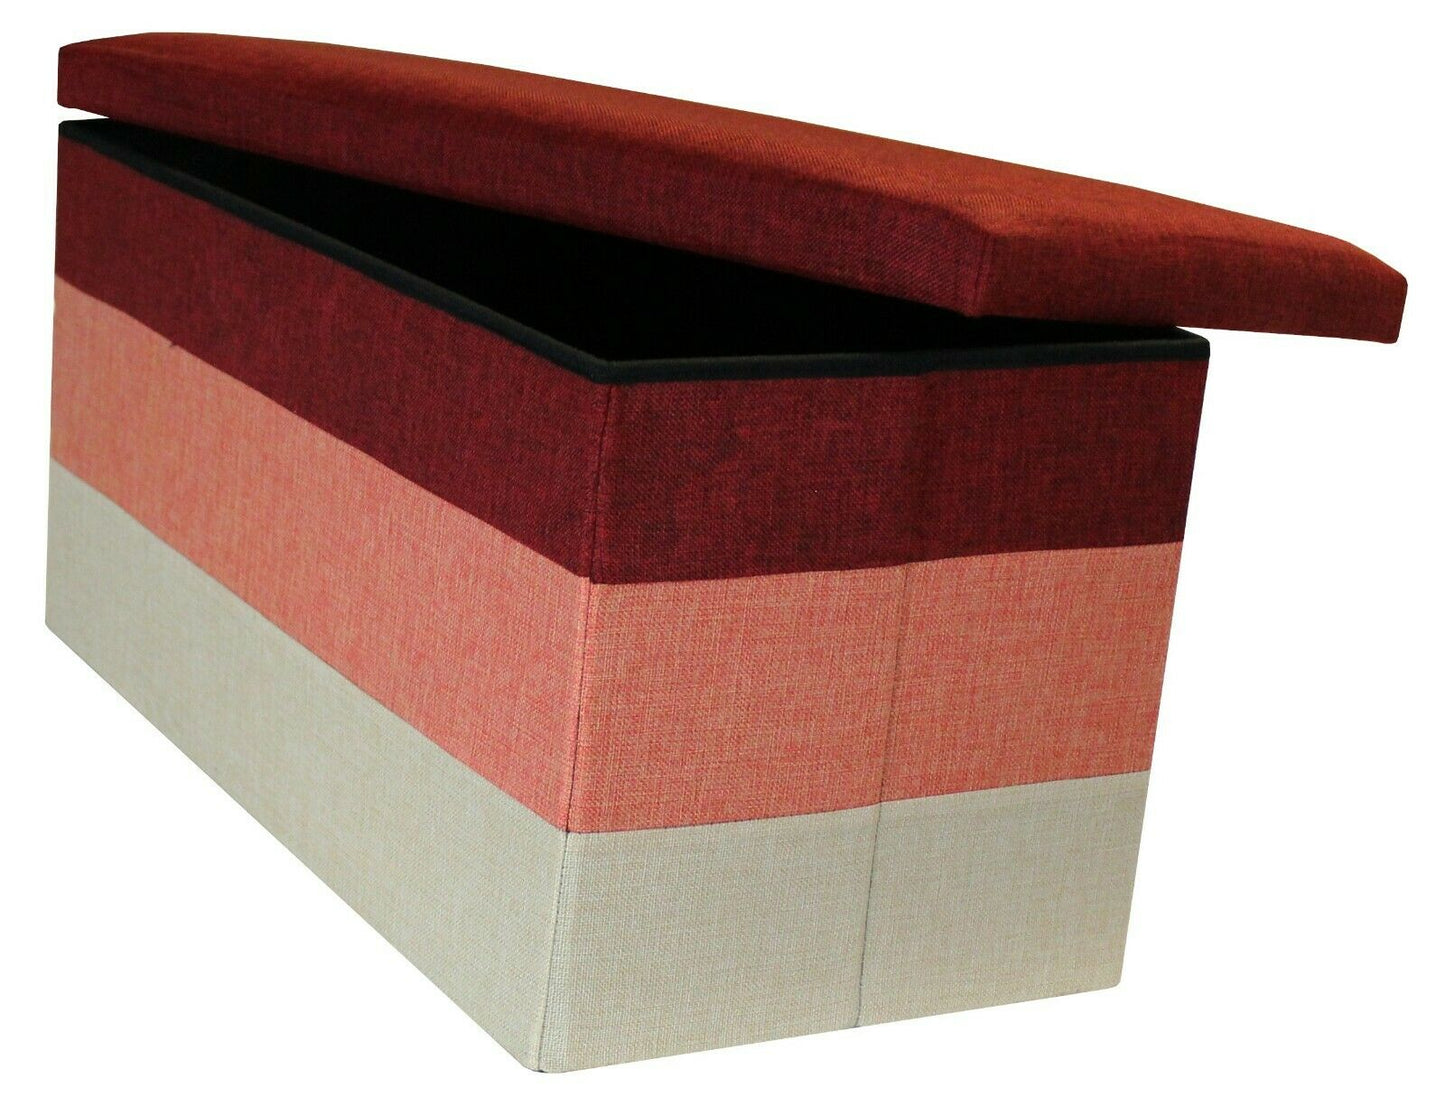 Large Linear Storage Ottoman Red Orange Three Tone Foot Stool Seat Storage Box